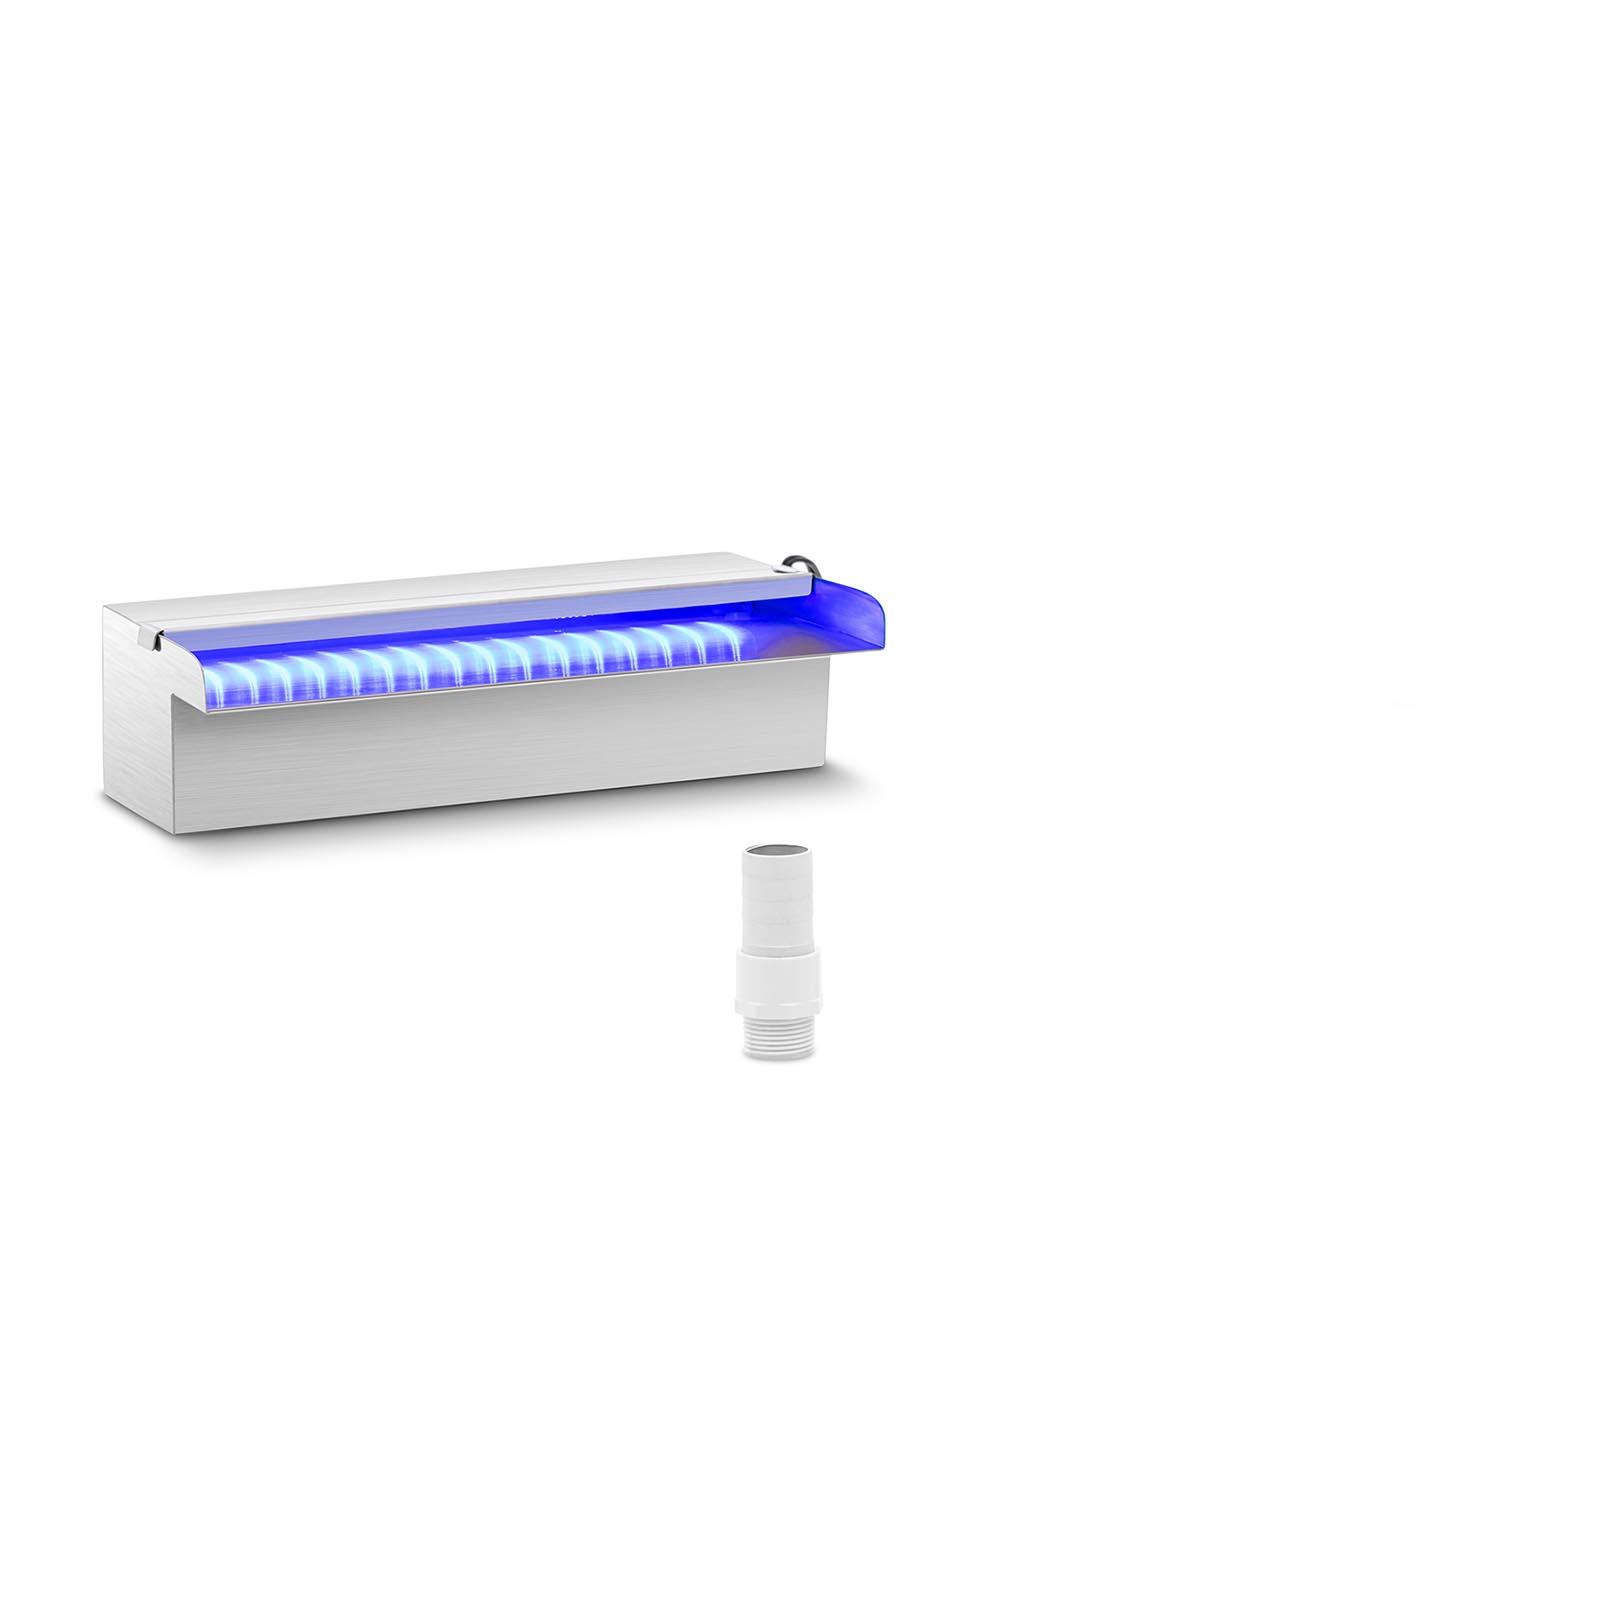 Surge shower - 30 cm - LED lighting - Blue / White - open water outlet